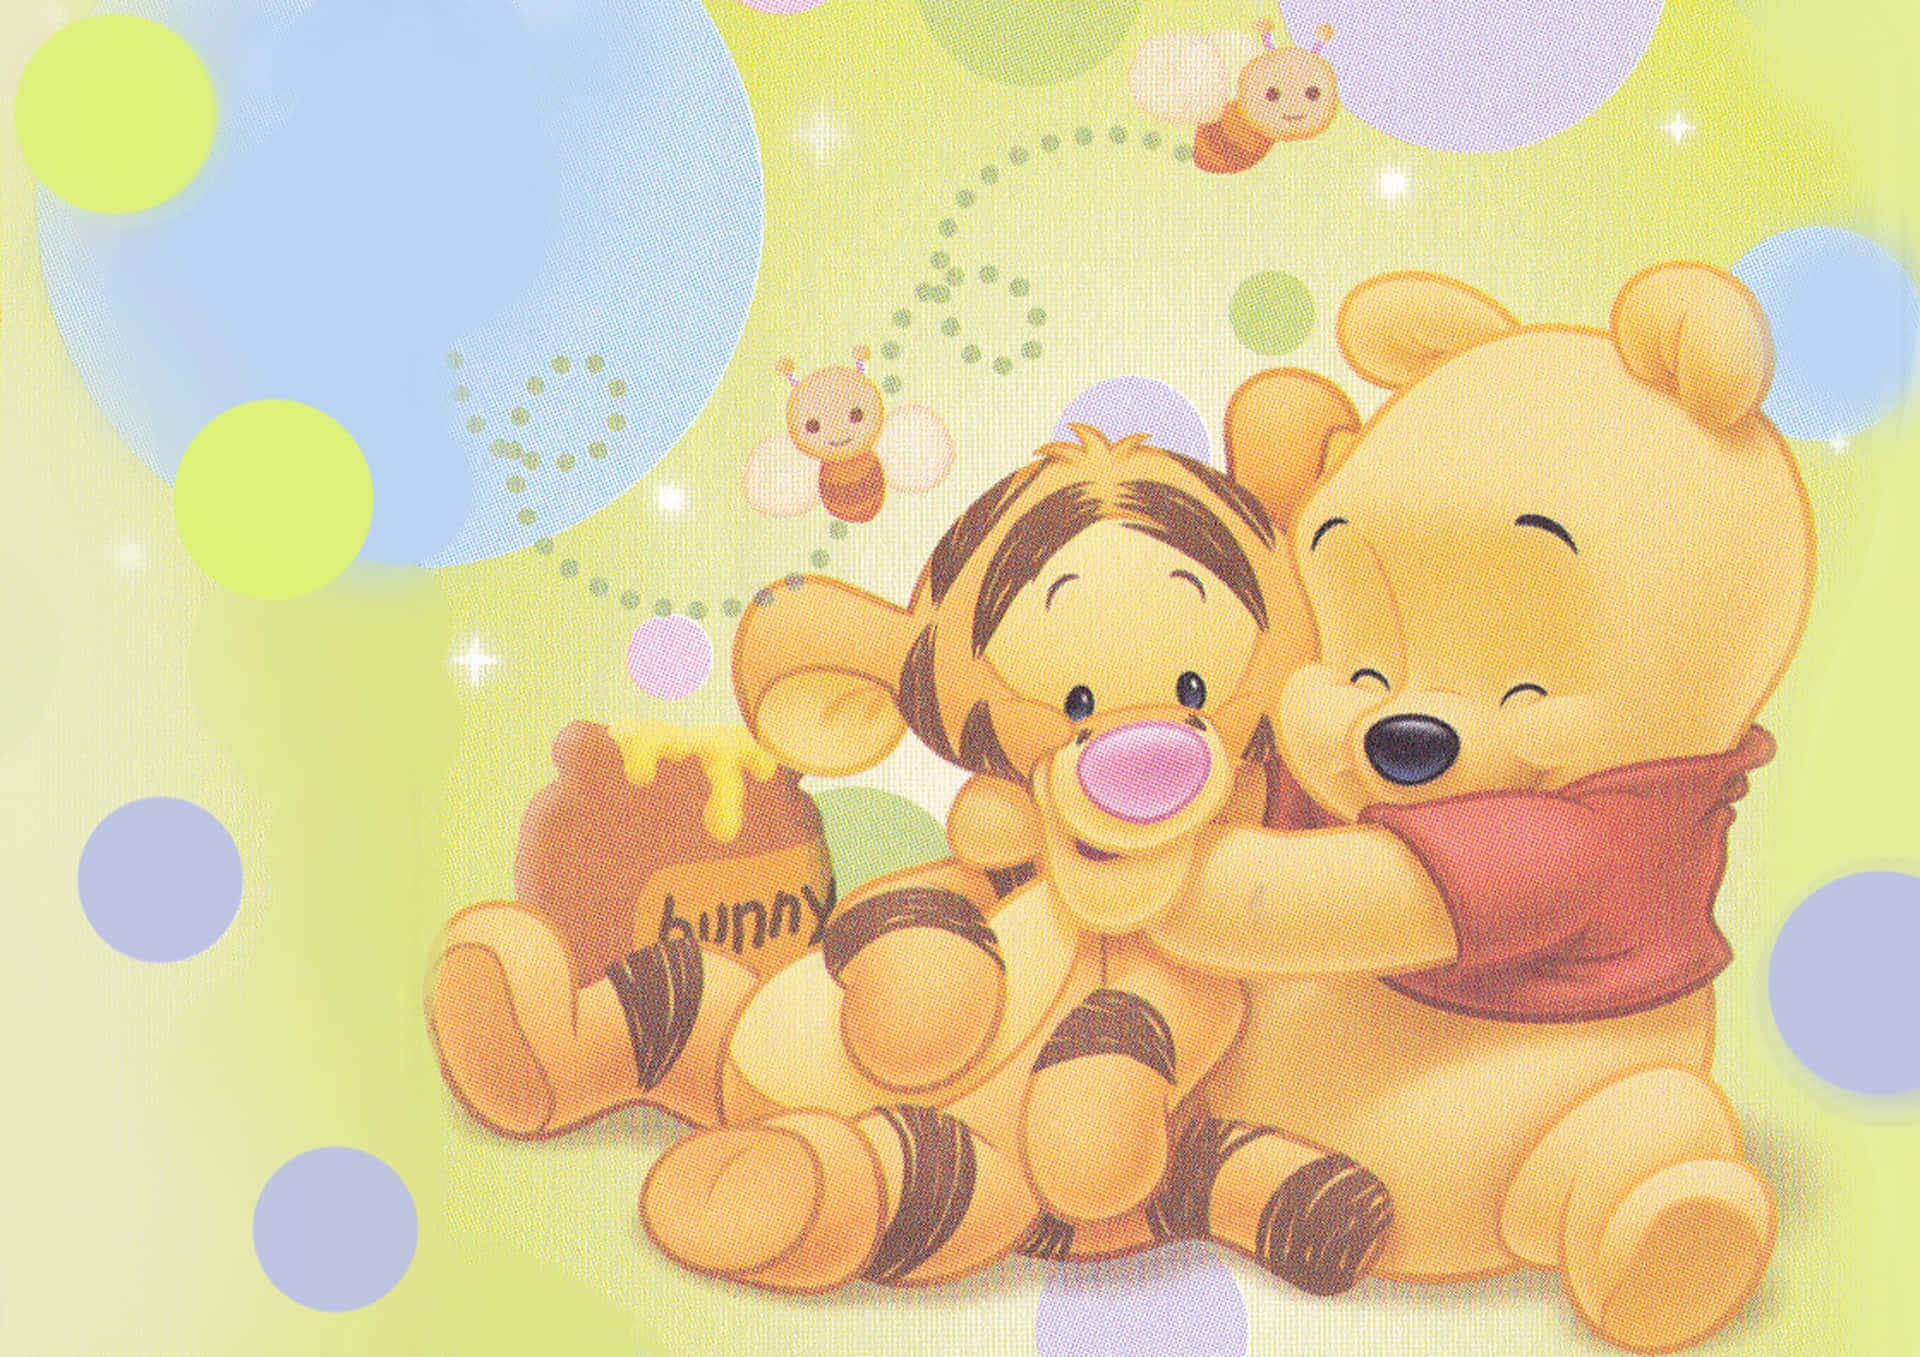 An Adorable Desktop Wallpaper with Winnie the Pooh Wallpaper